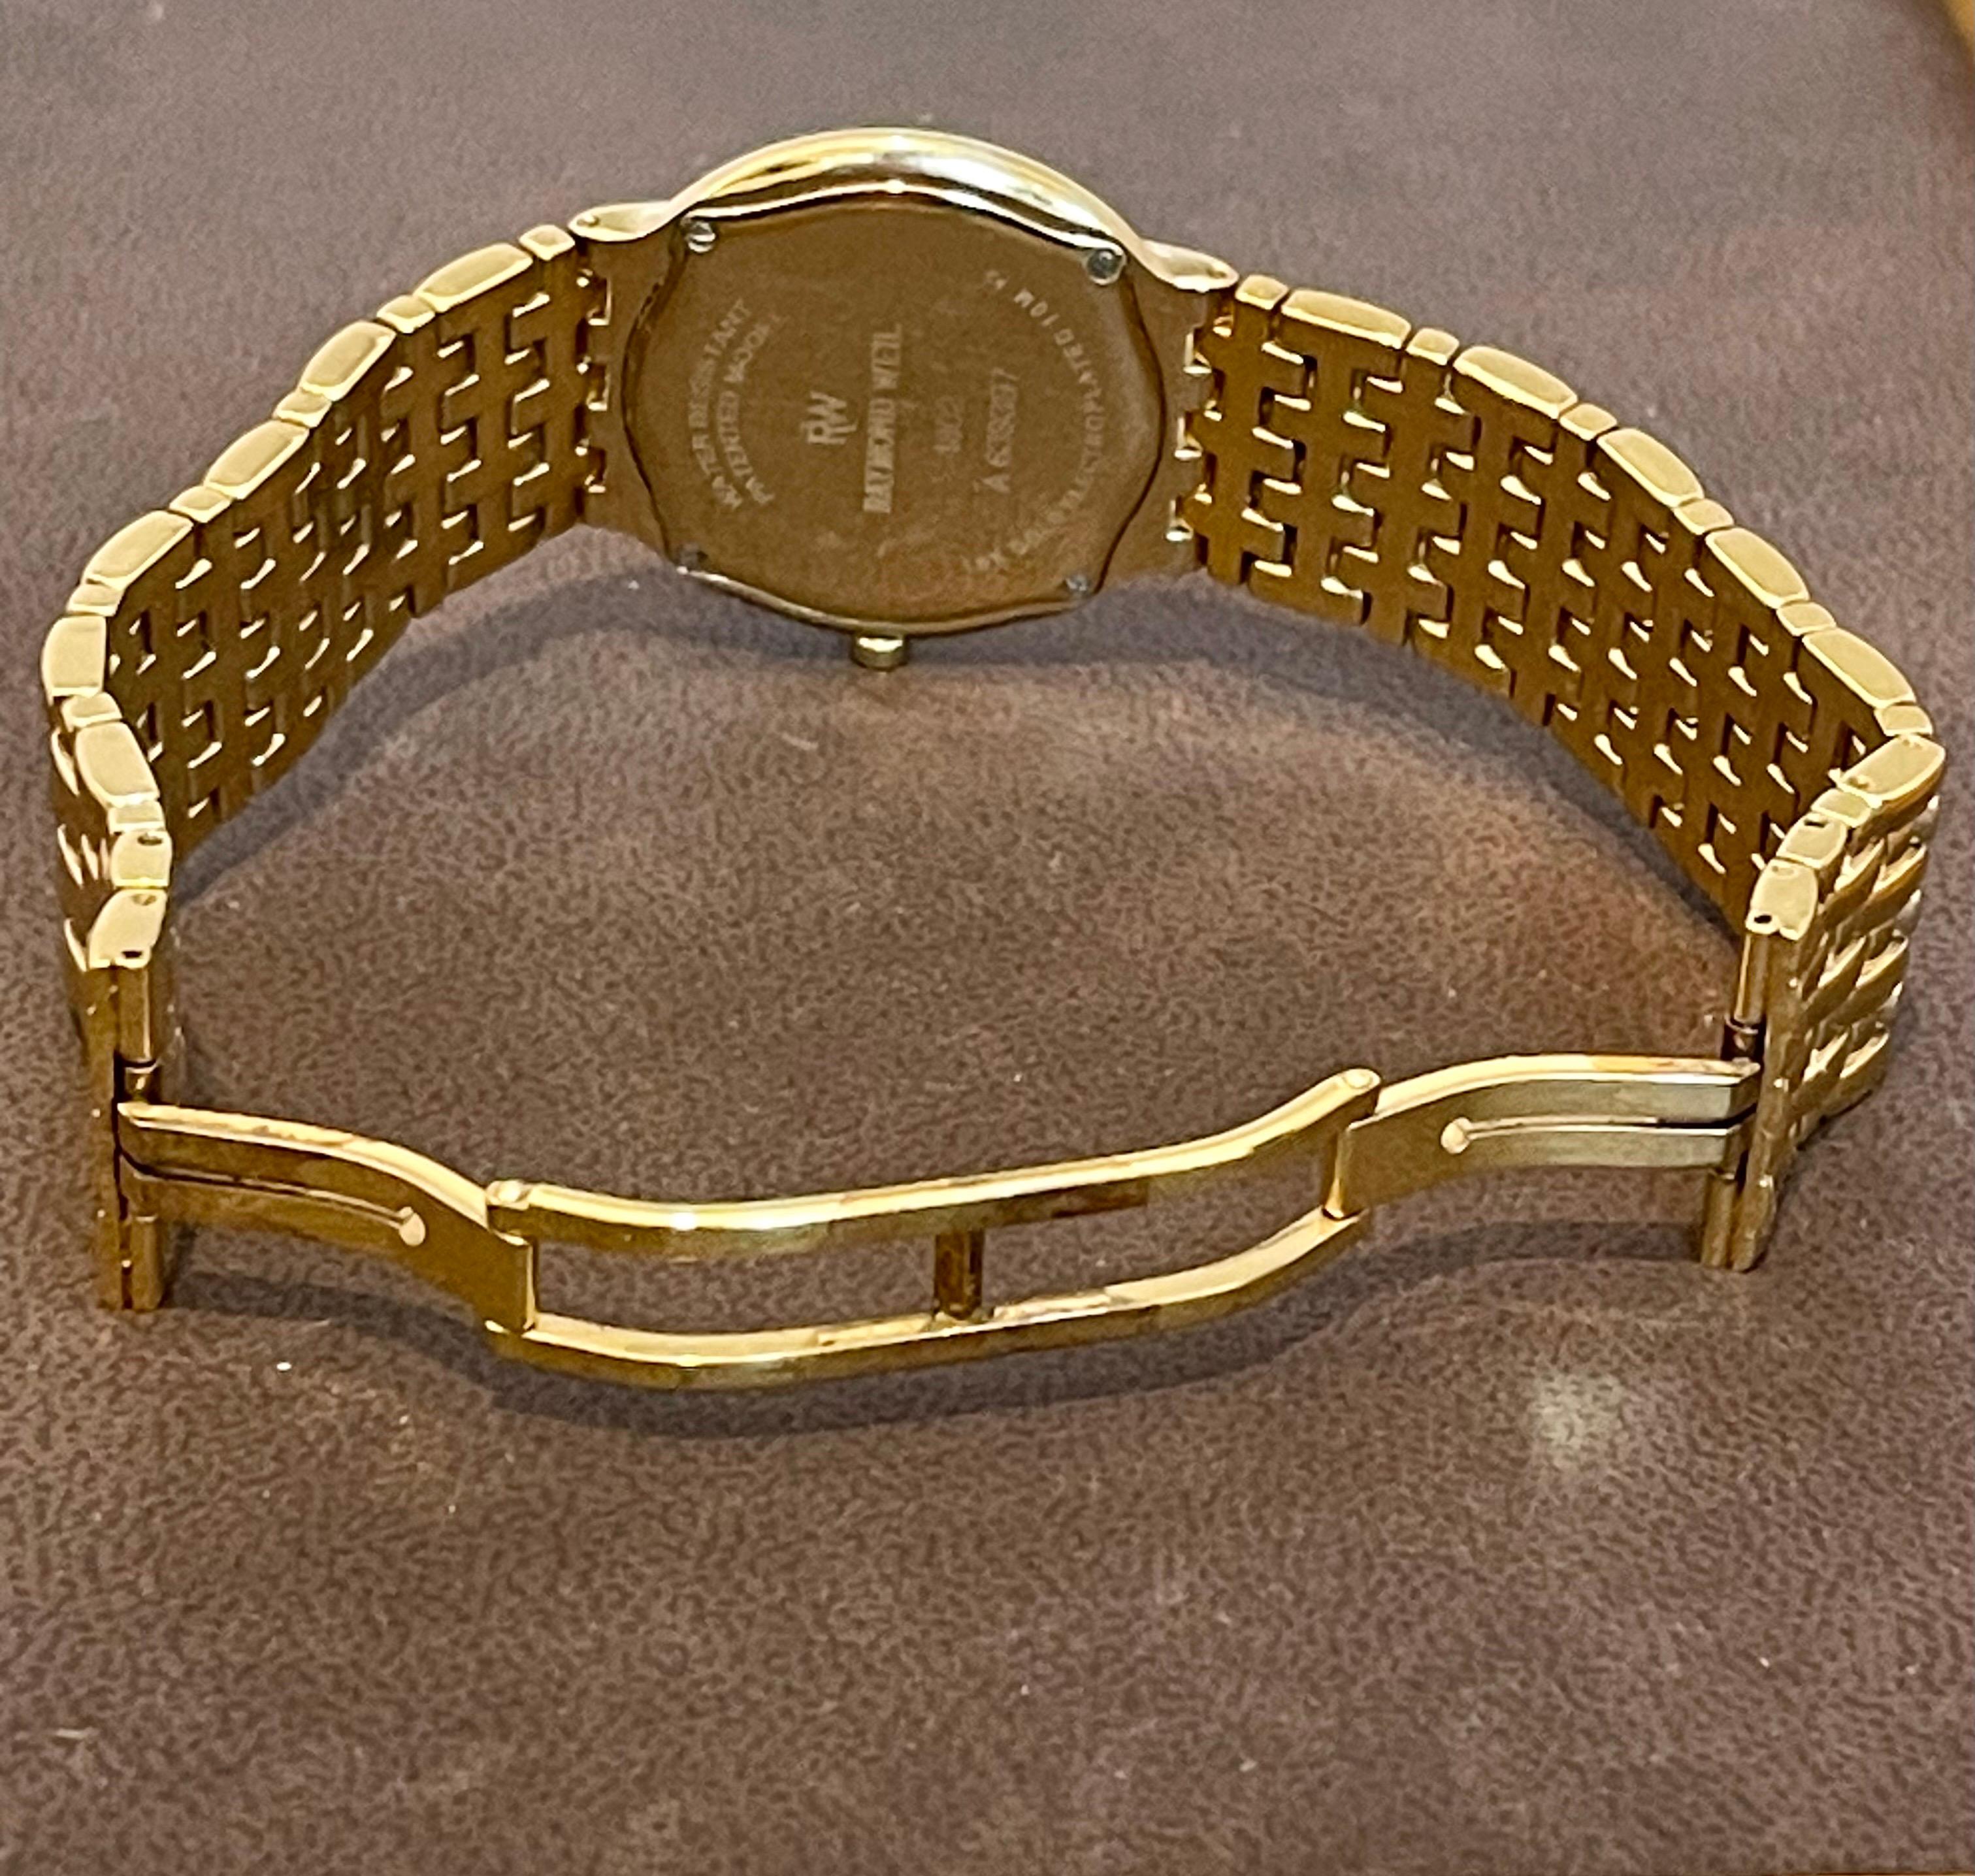 Raymond Weil Fidelio 18K Gold Electroplated Watch with Date & Diamonds 4